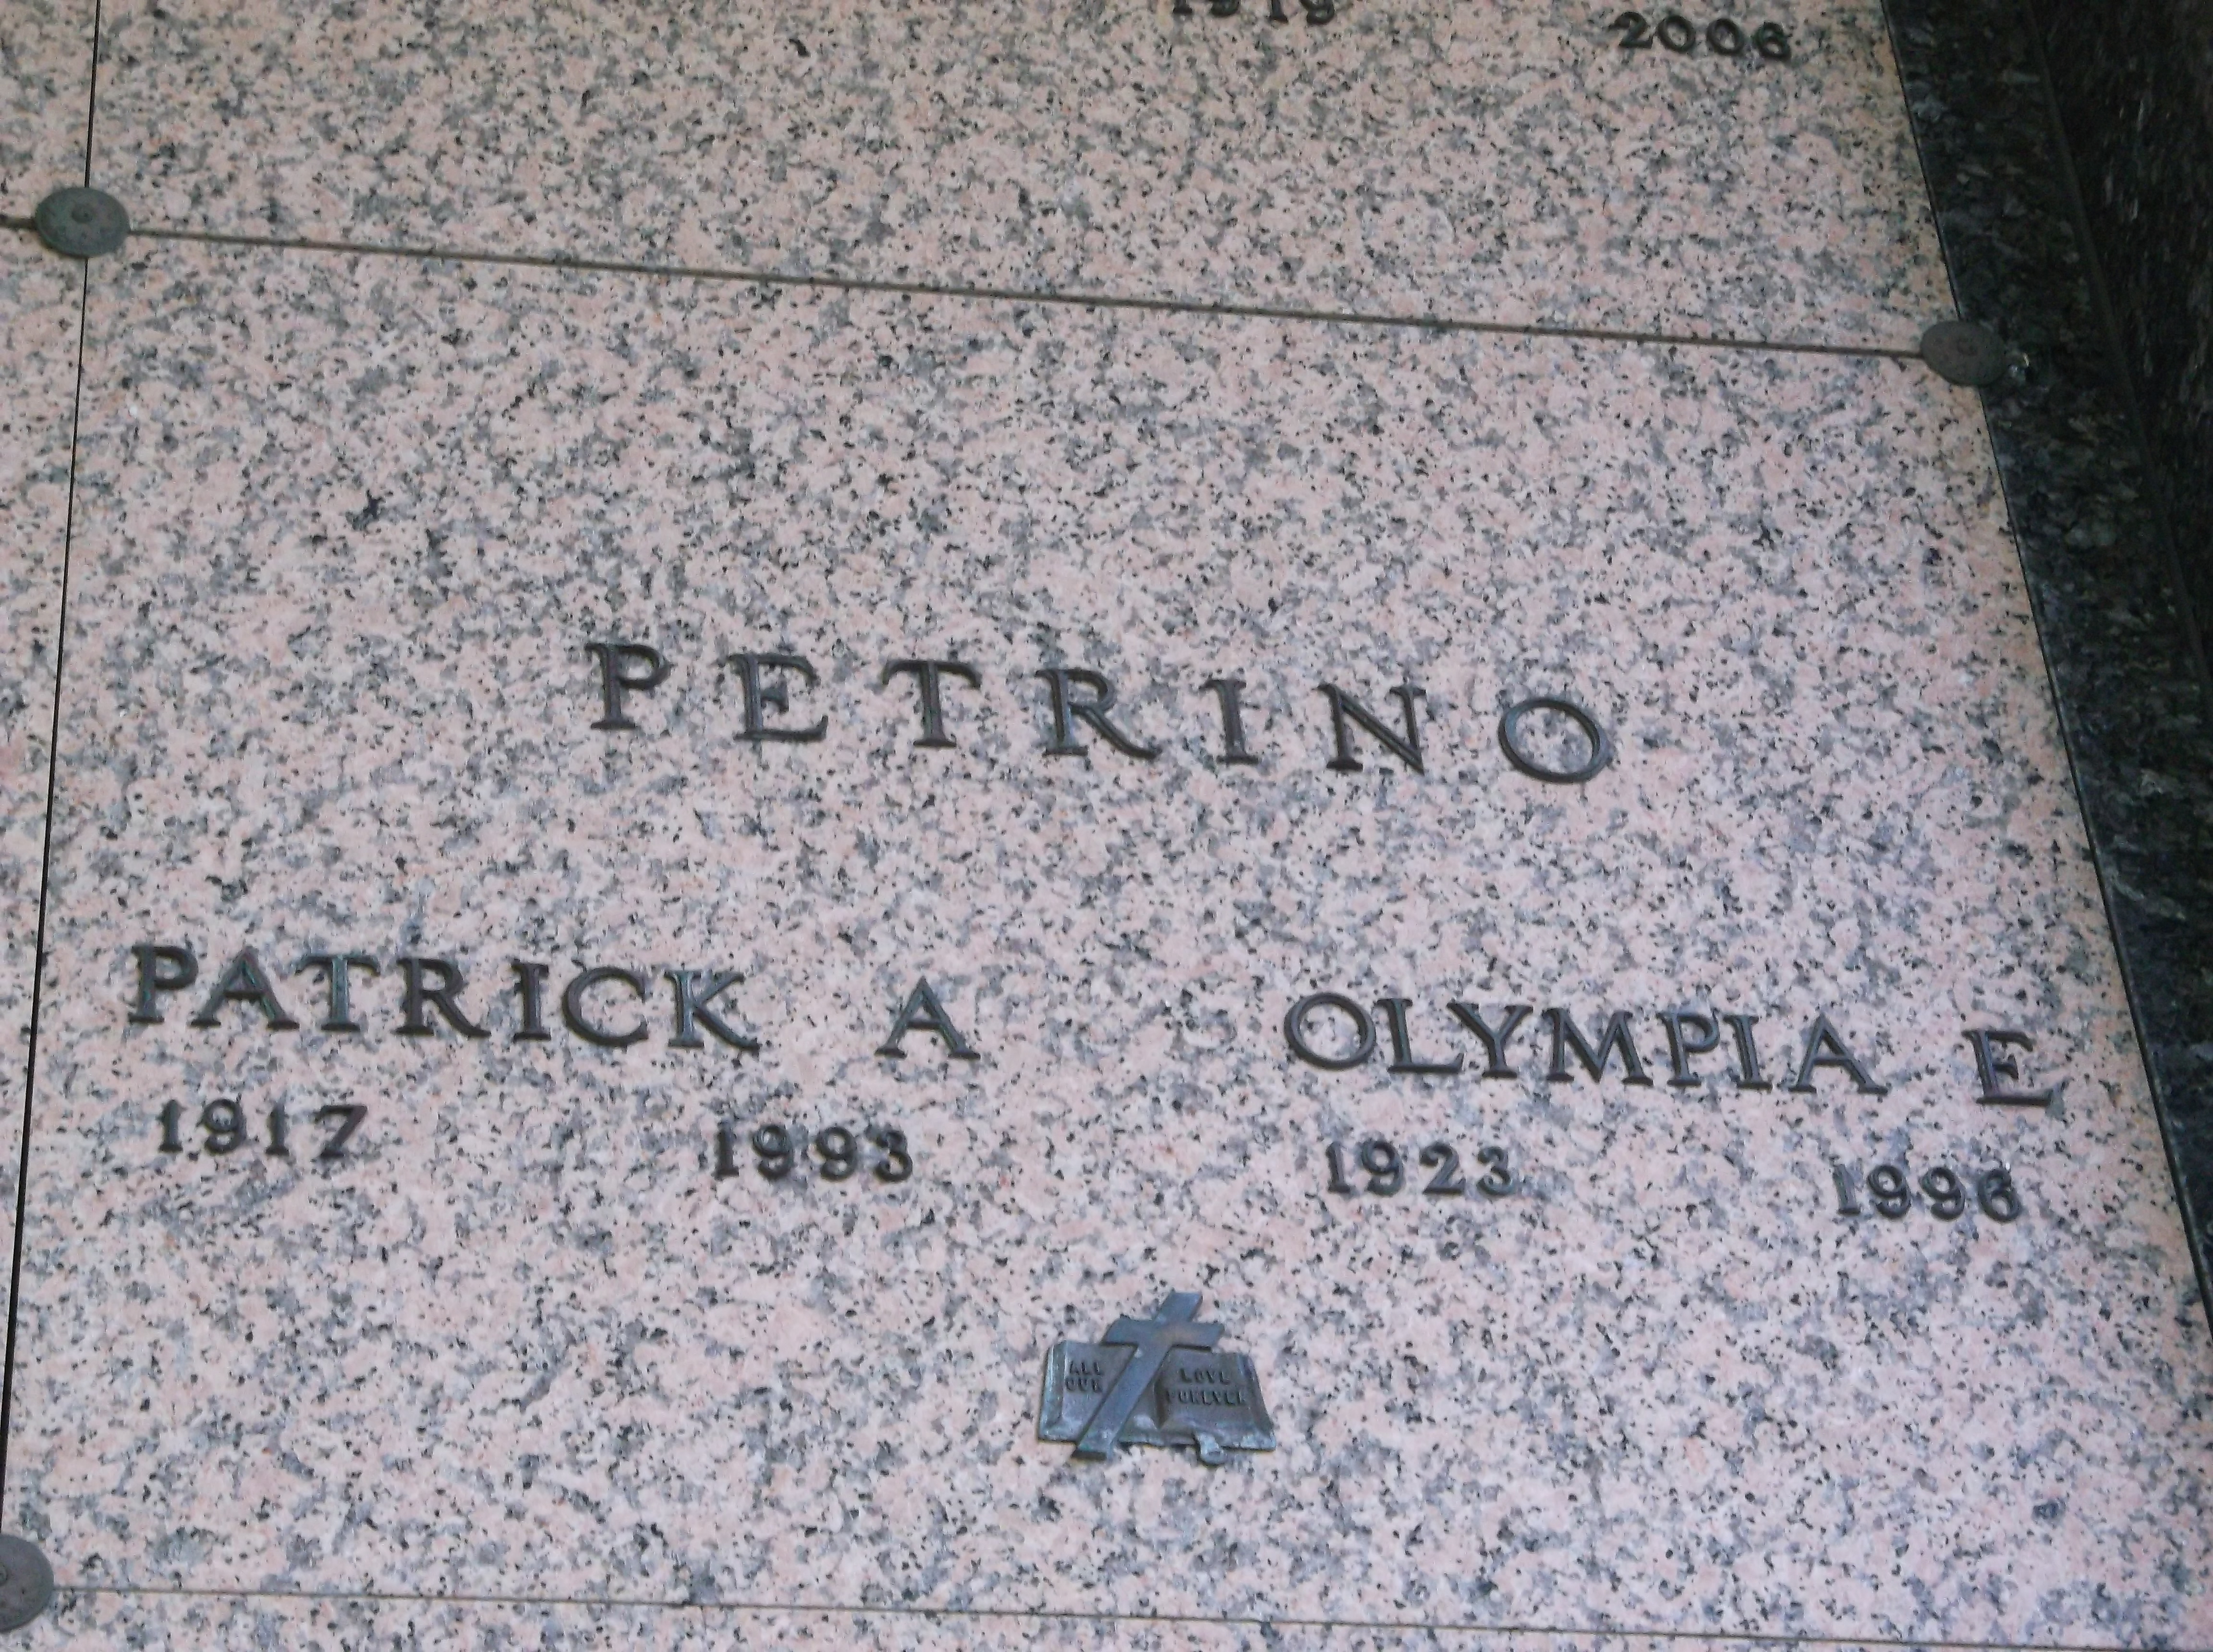 Olympia E Petrino